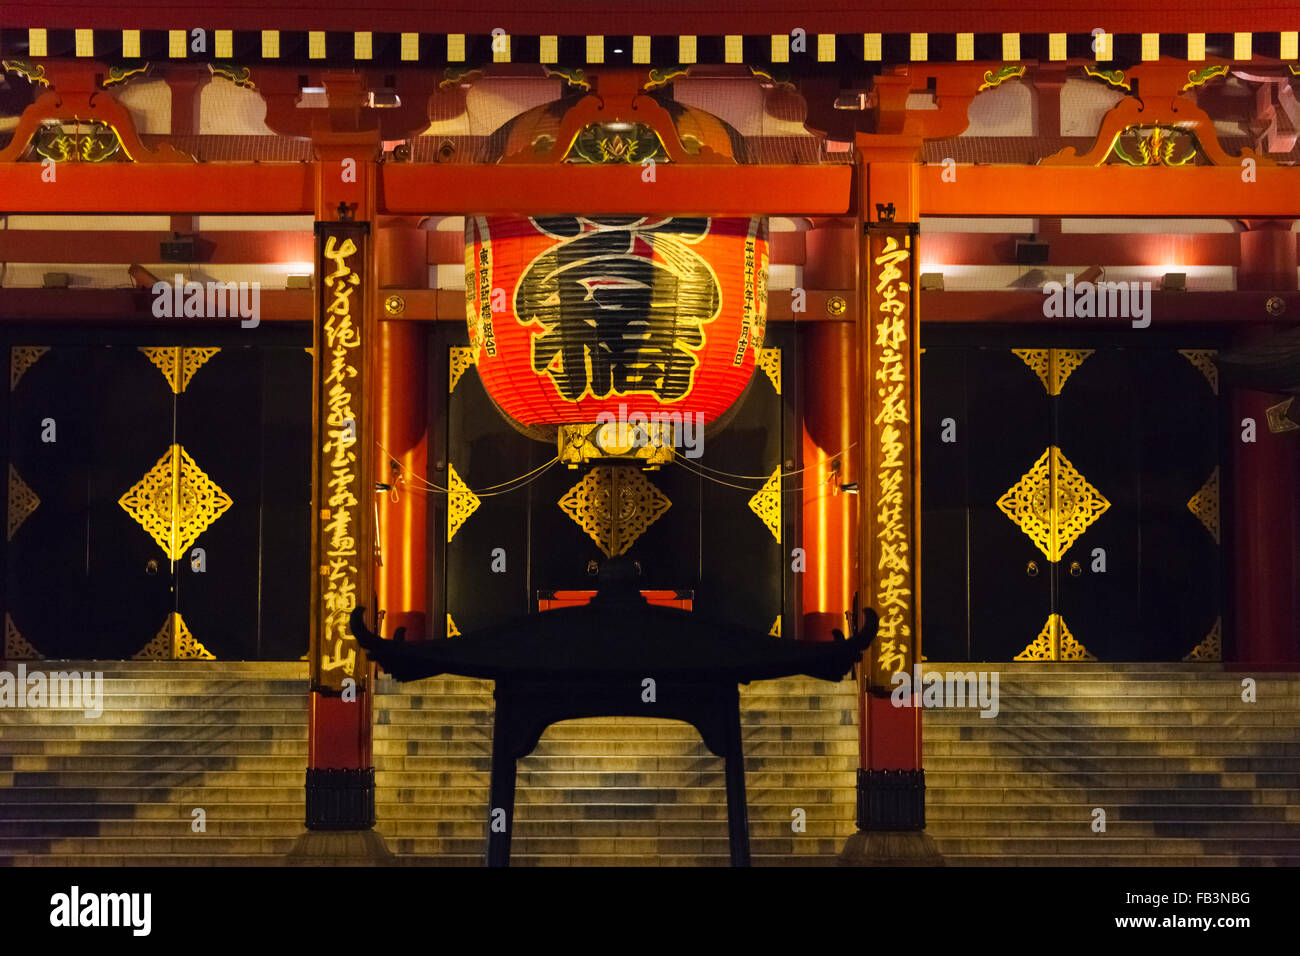 Rote Laterne und Weihrauch-Brenner am Kaminari Tor am Eingangstor zu Sensoji Tempel, Asakusa, Tokio, Japan Stockfoto